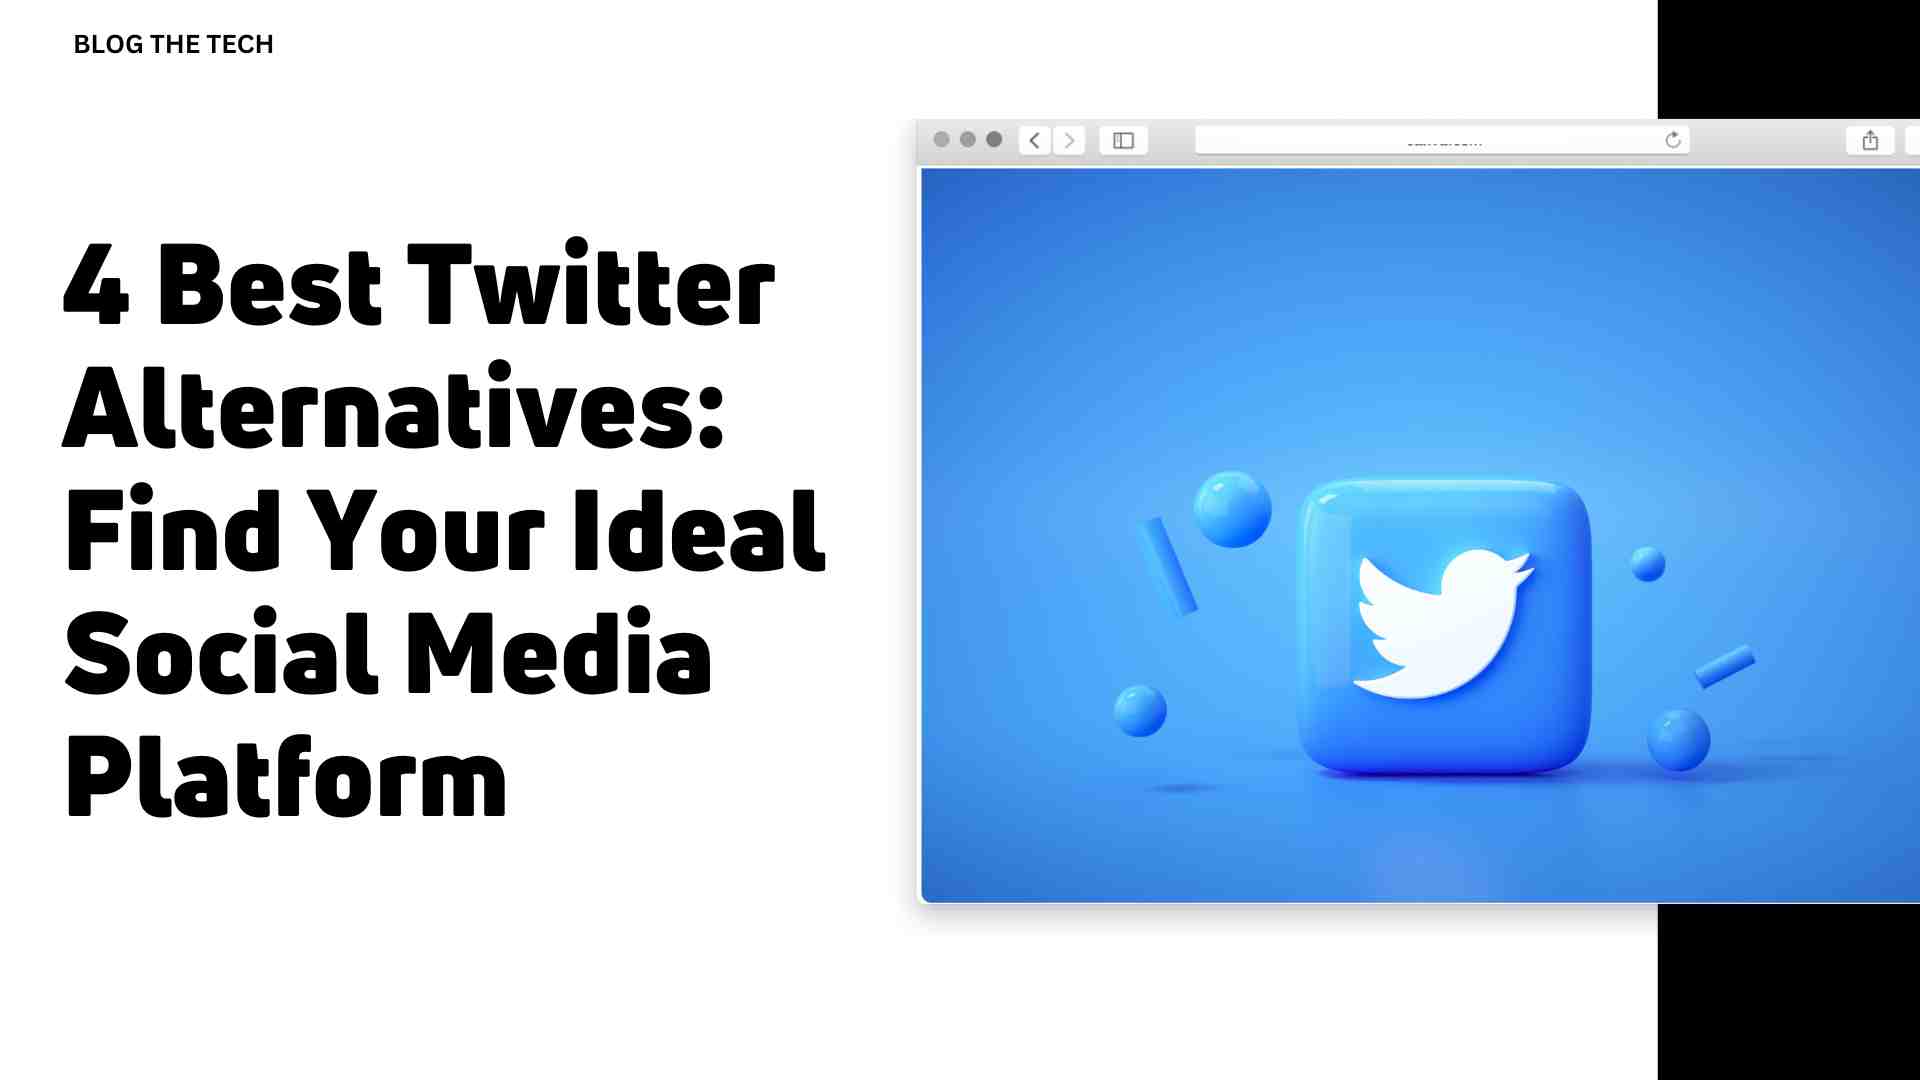 4 Best Twitter Alternatives: Find Your Ideal Social Media Platform